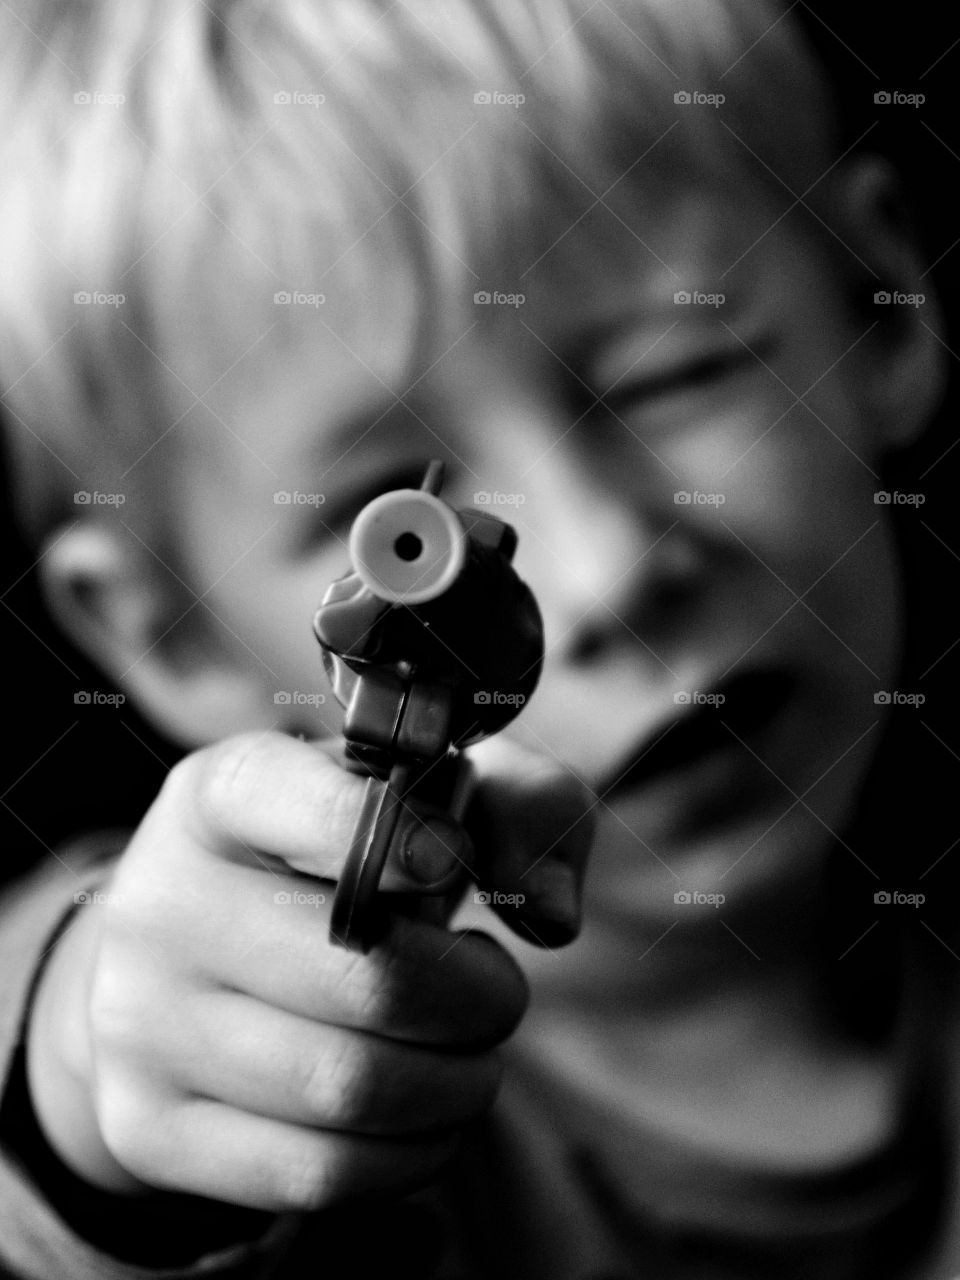 Son with a toy gun